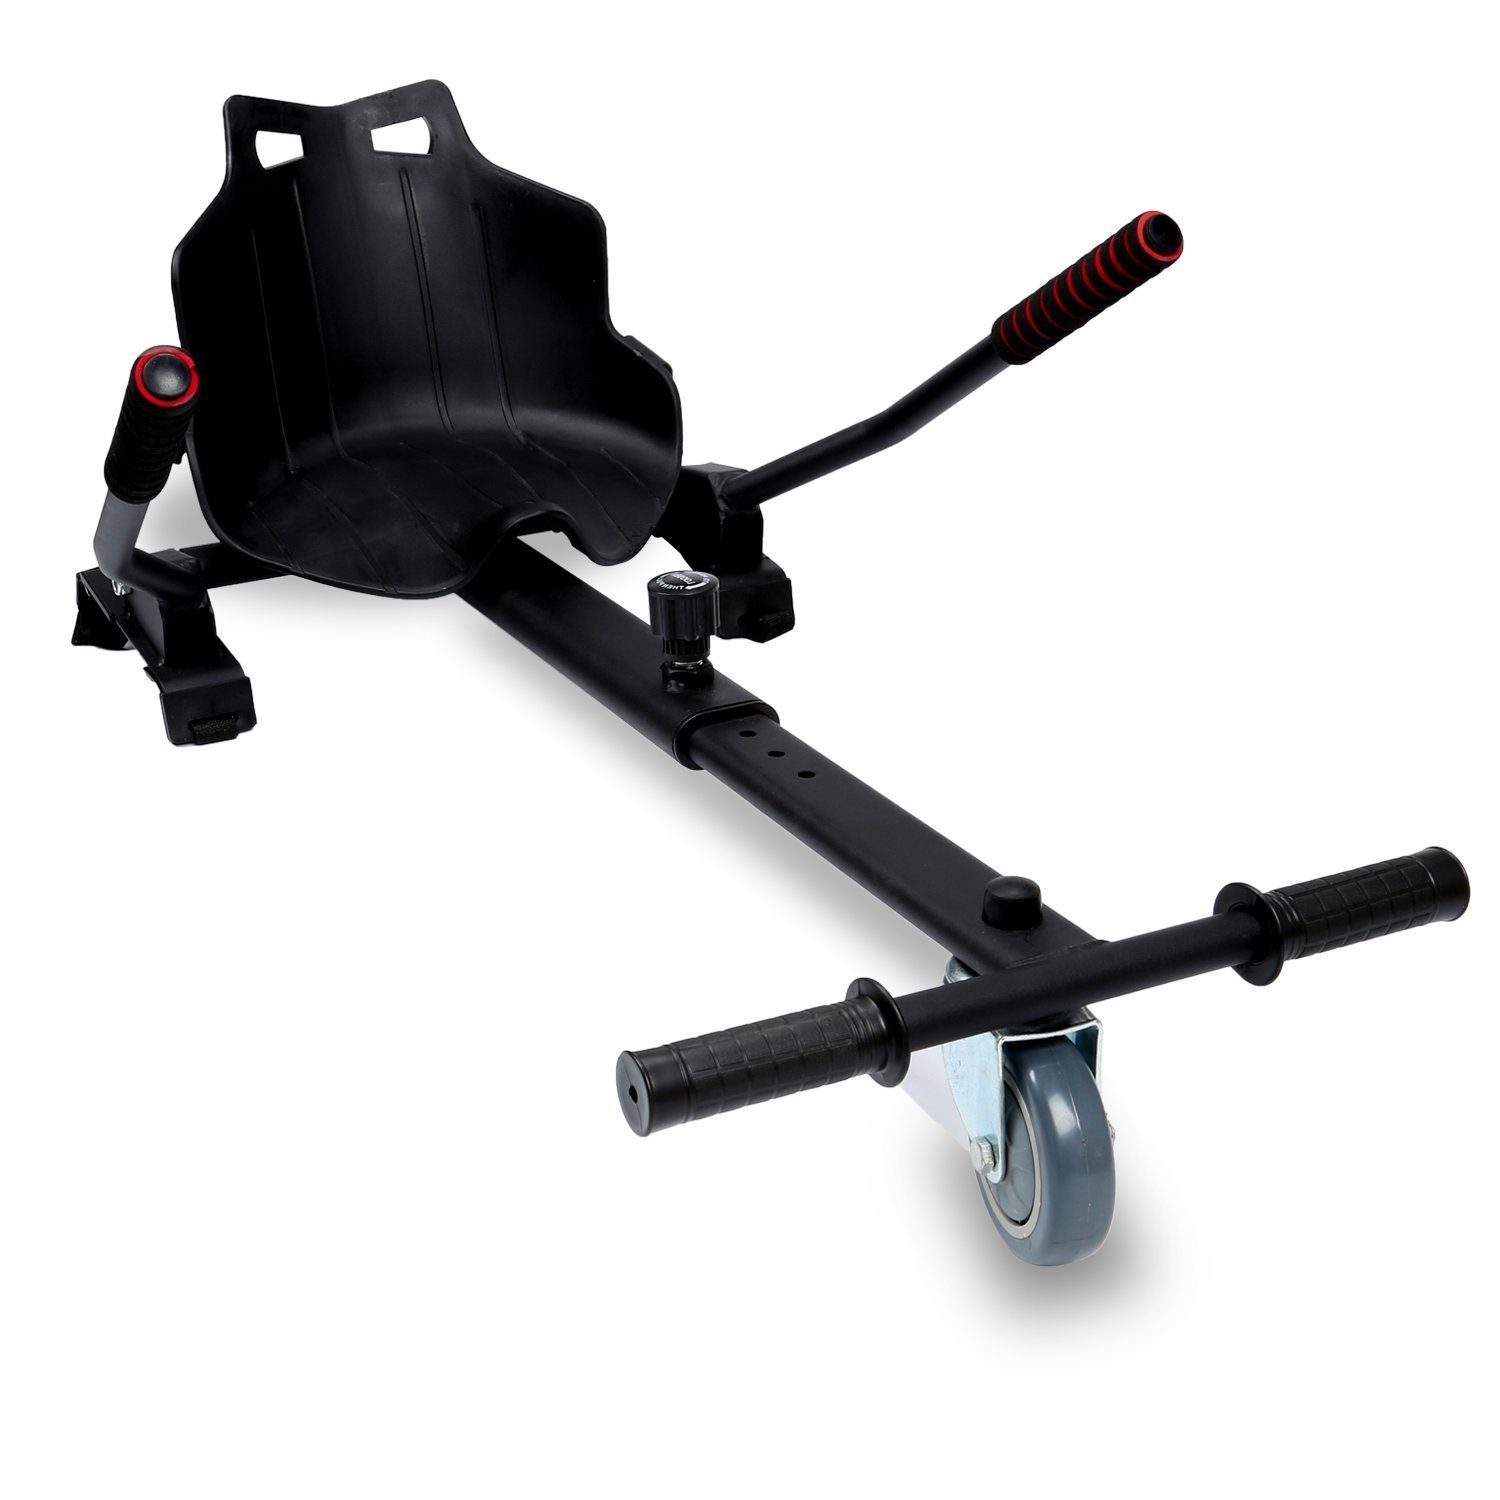 Clanmacy Balance Scooter Kart Hoverboard Sitz Sitzscooter für 6,5